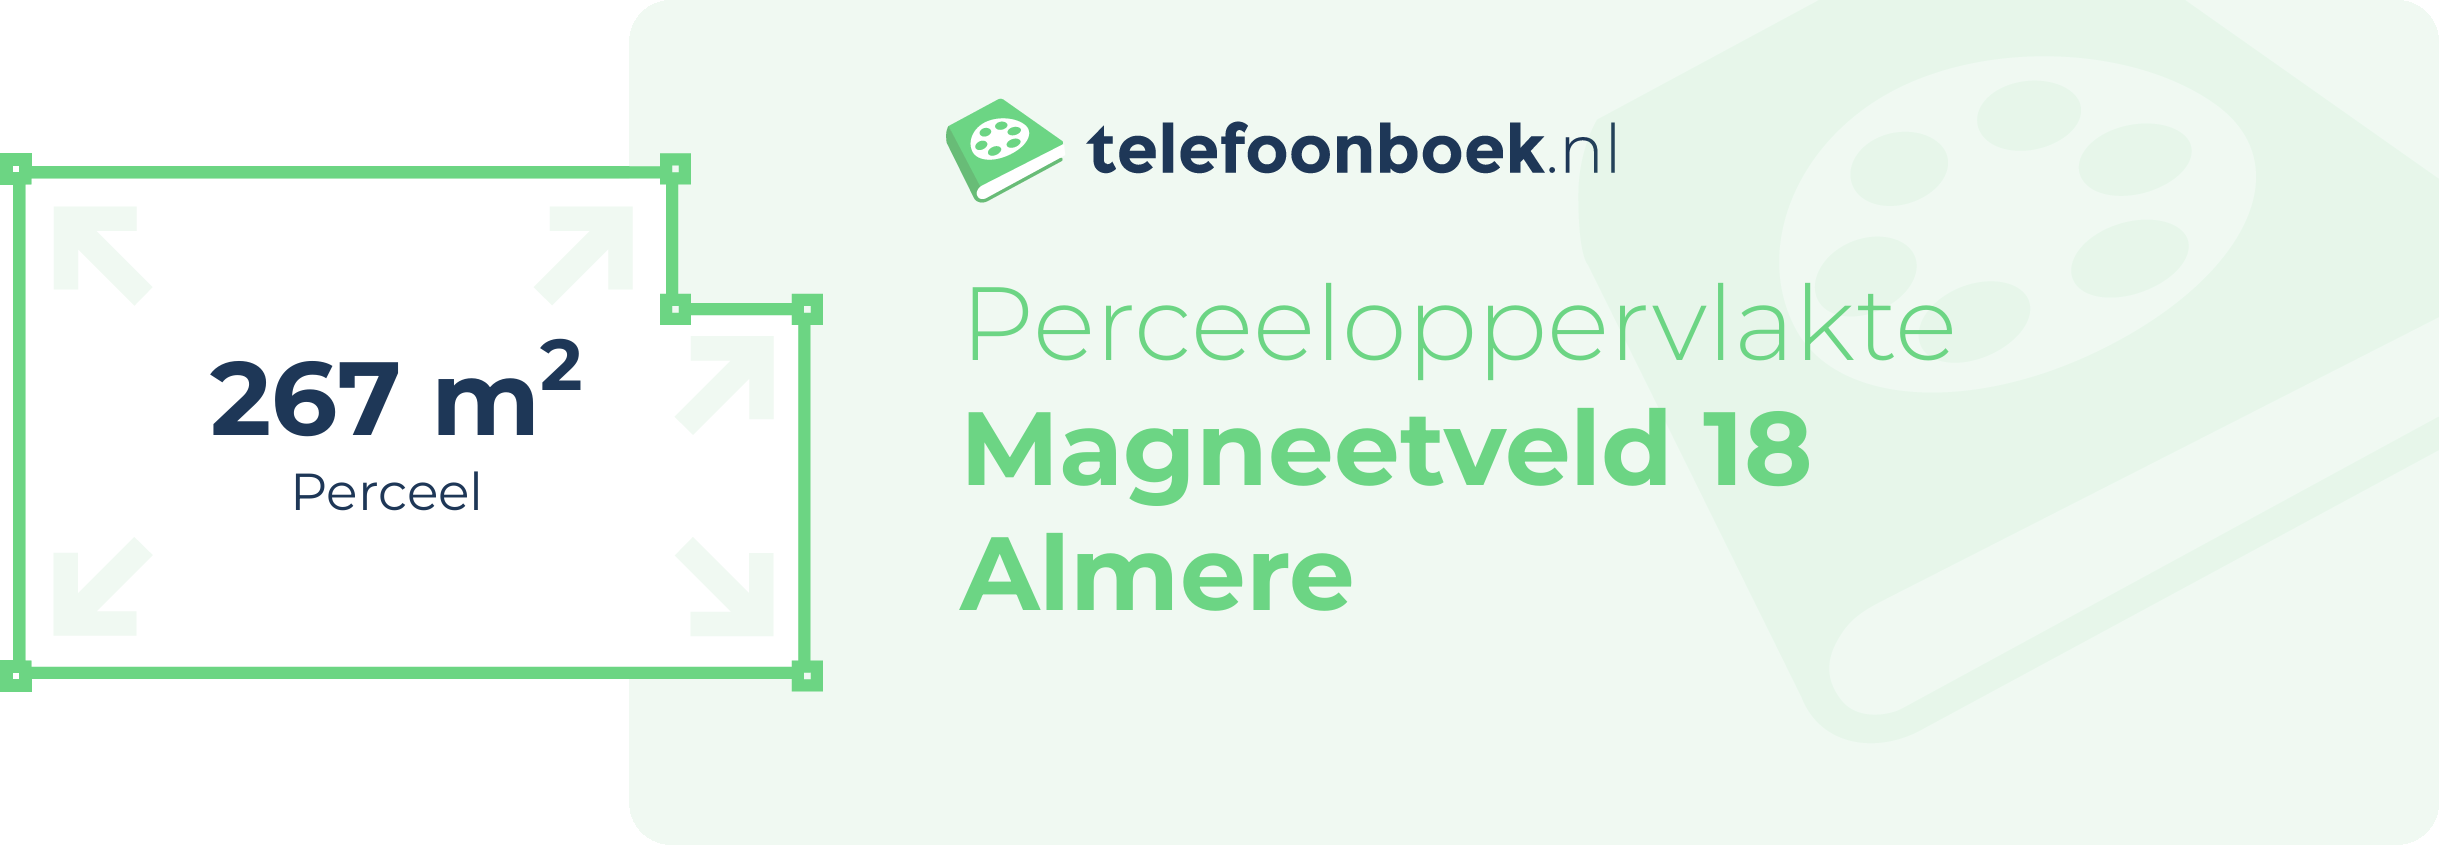 Perceeloppervlakte Magneetveld 18 Almere